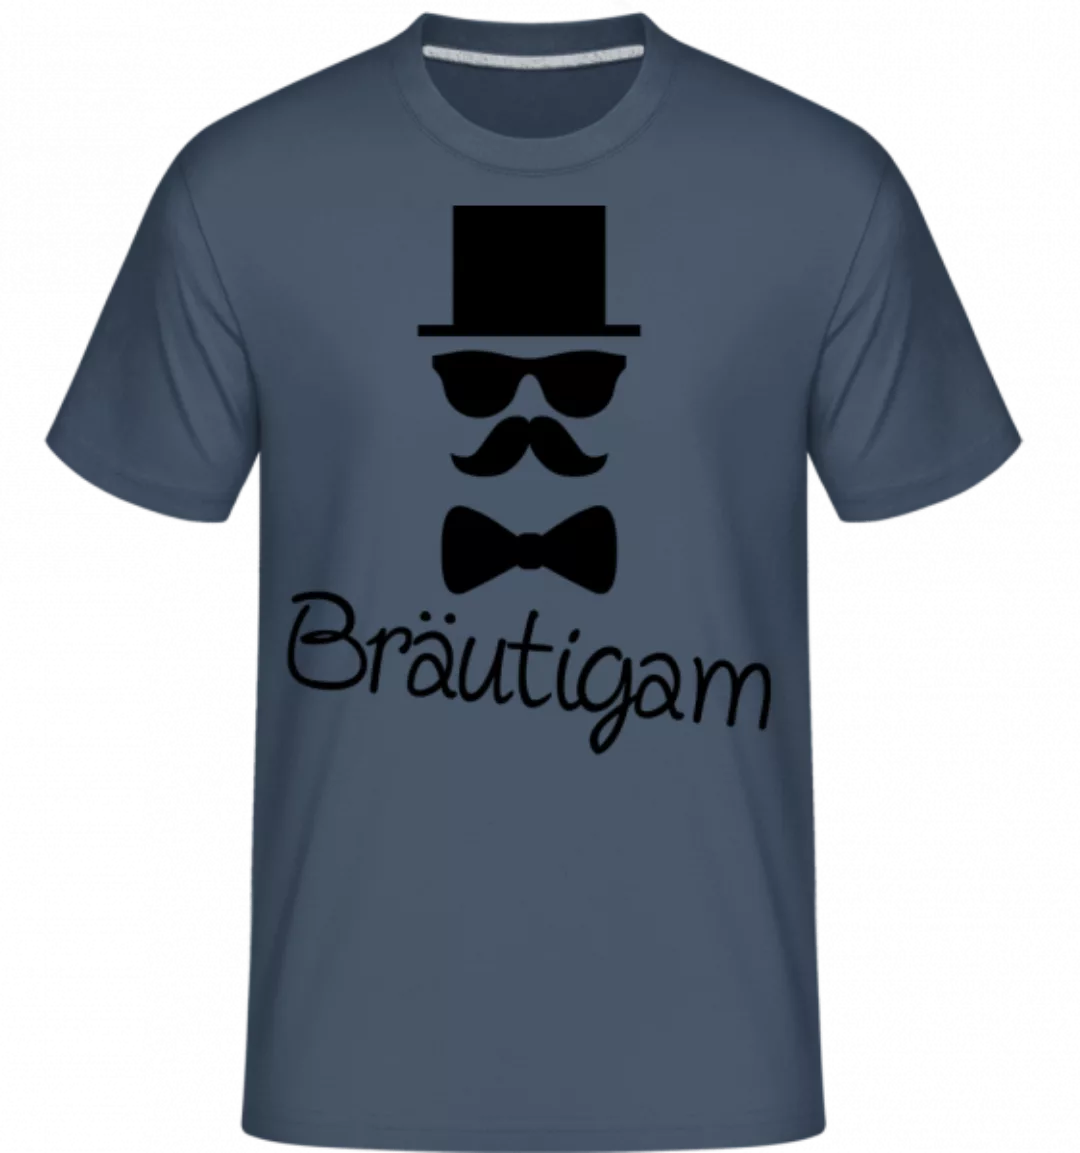 Bräutigam · Shirtinator Männer T-Shirt günstig online kaufen